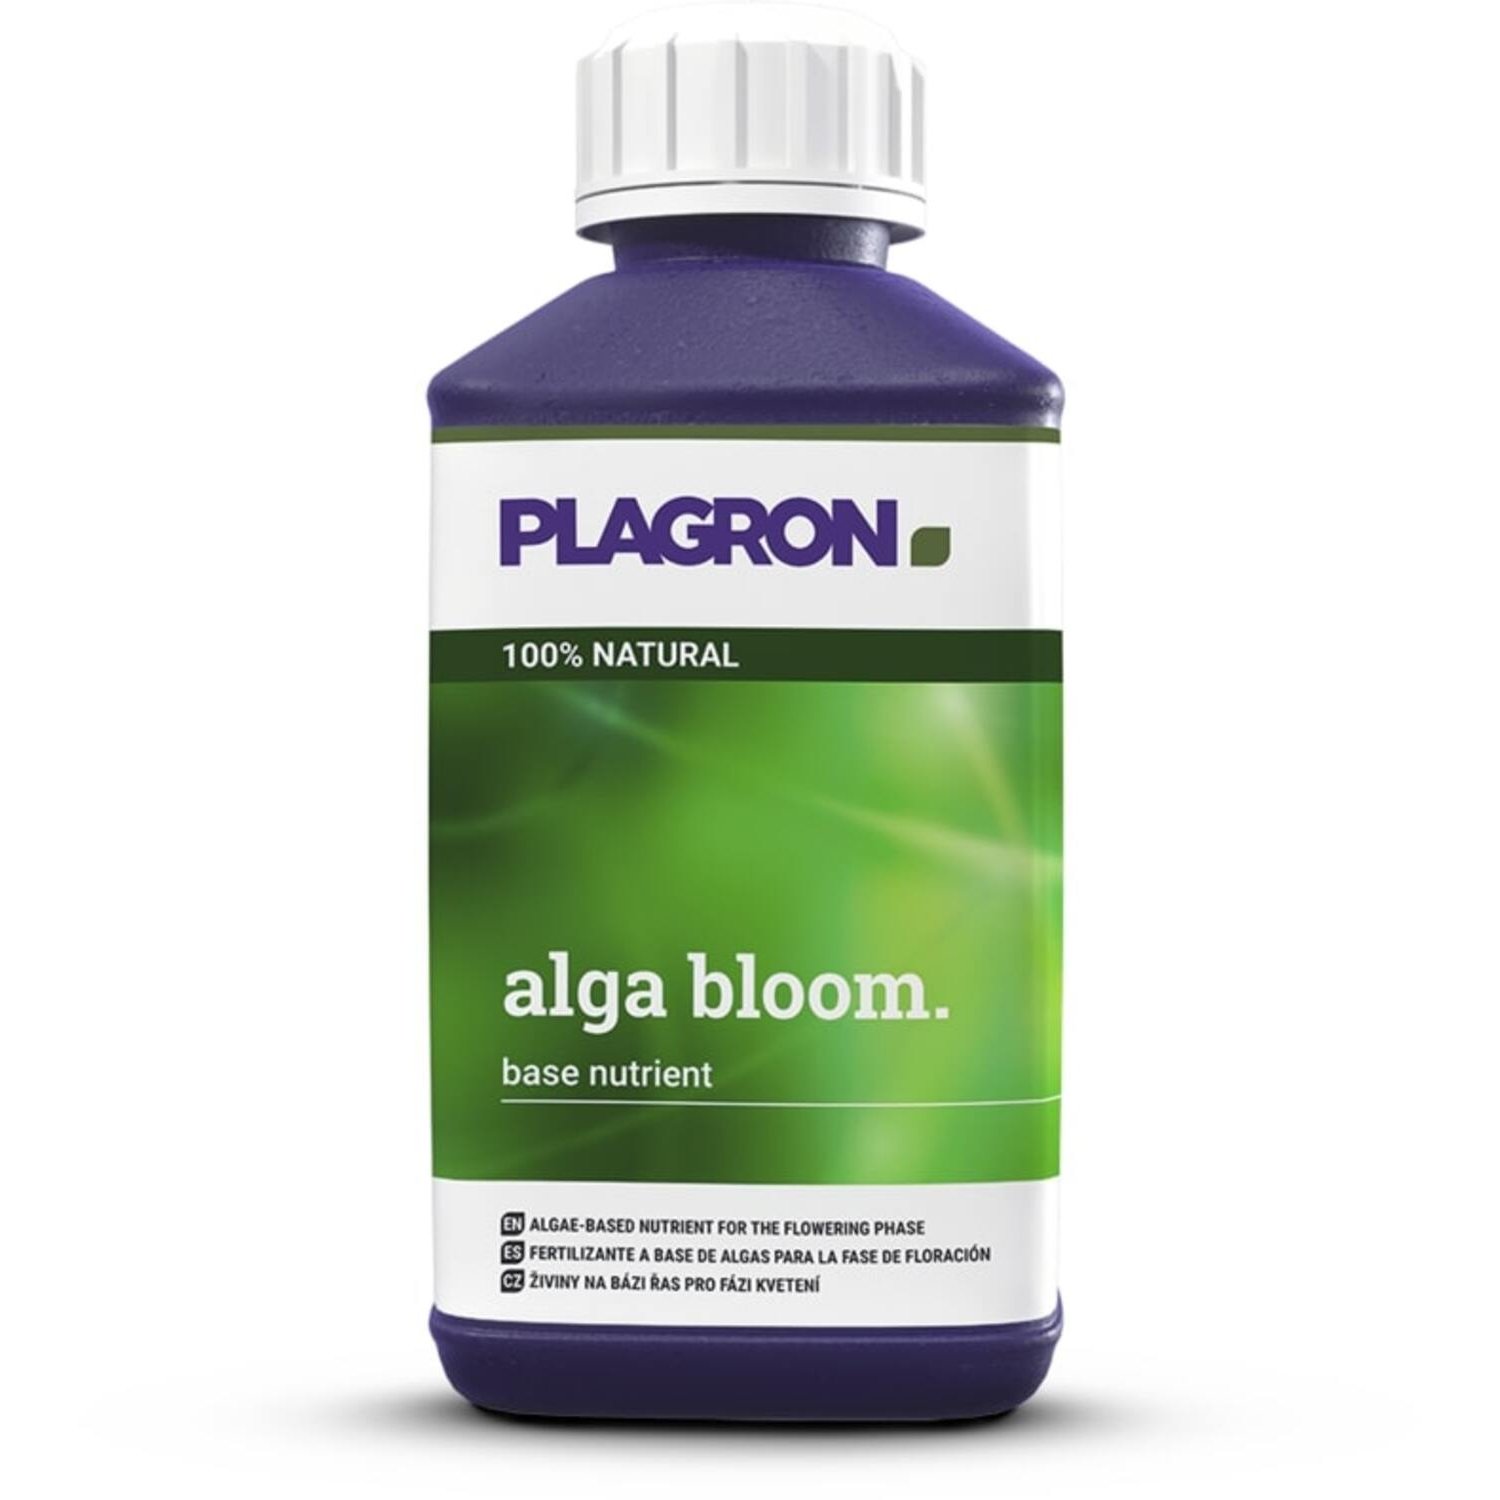 Plagron Alga Bloom 250ml